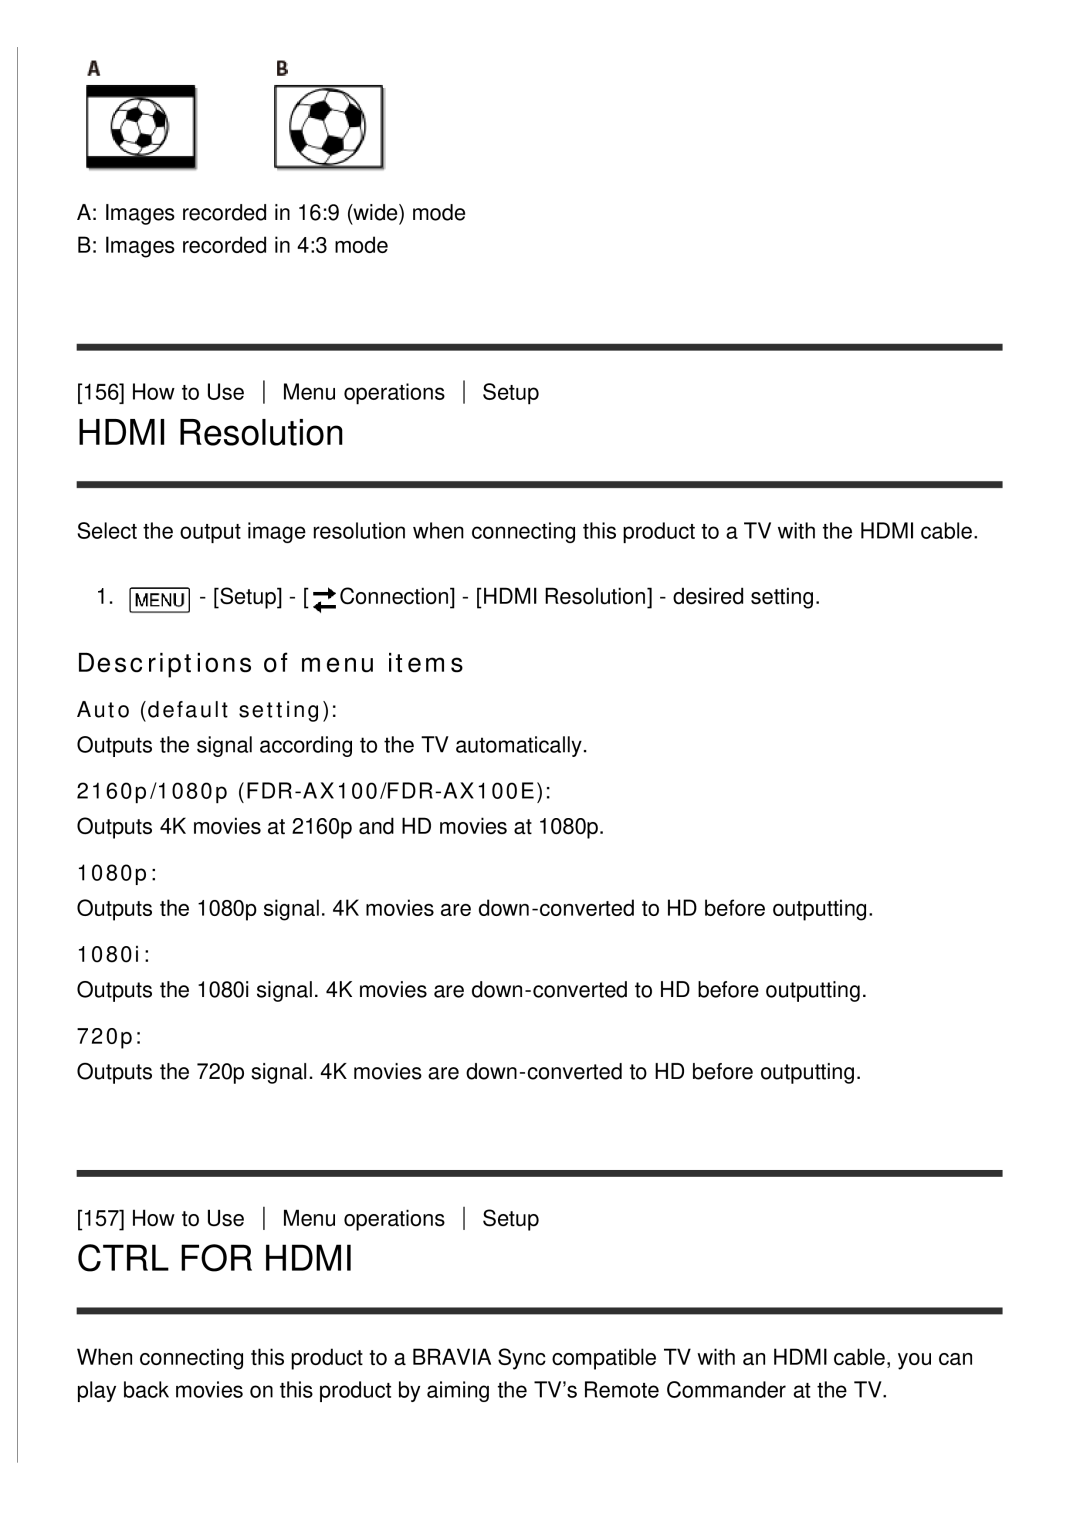 Sony manual HDMI Resolution, Ctrl For Hdmi, 2160p/1080p FDR-AX100/FDR-AX100E, 1080i, 720p, Descriptions of menu items 